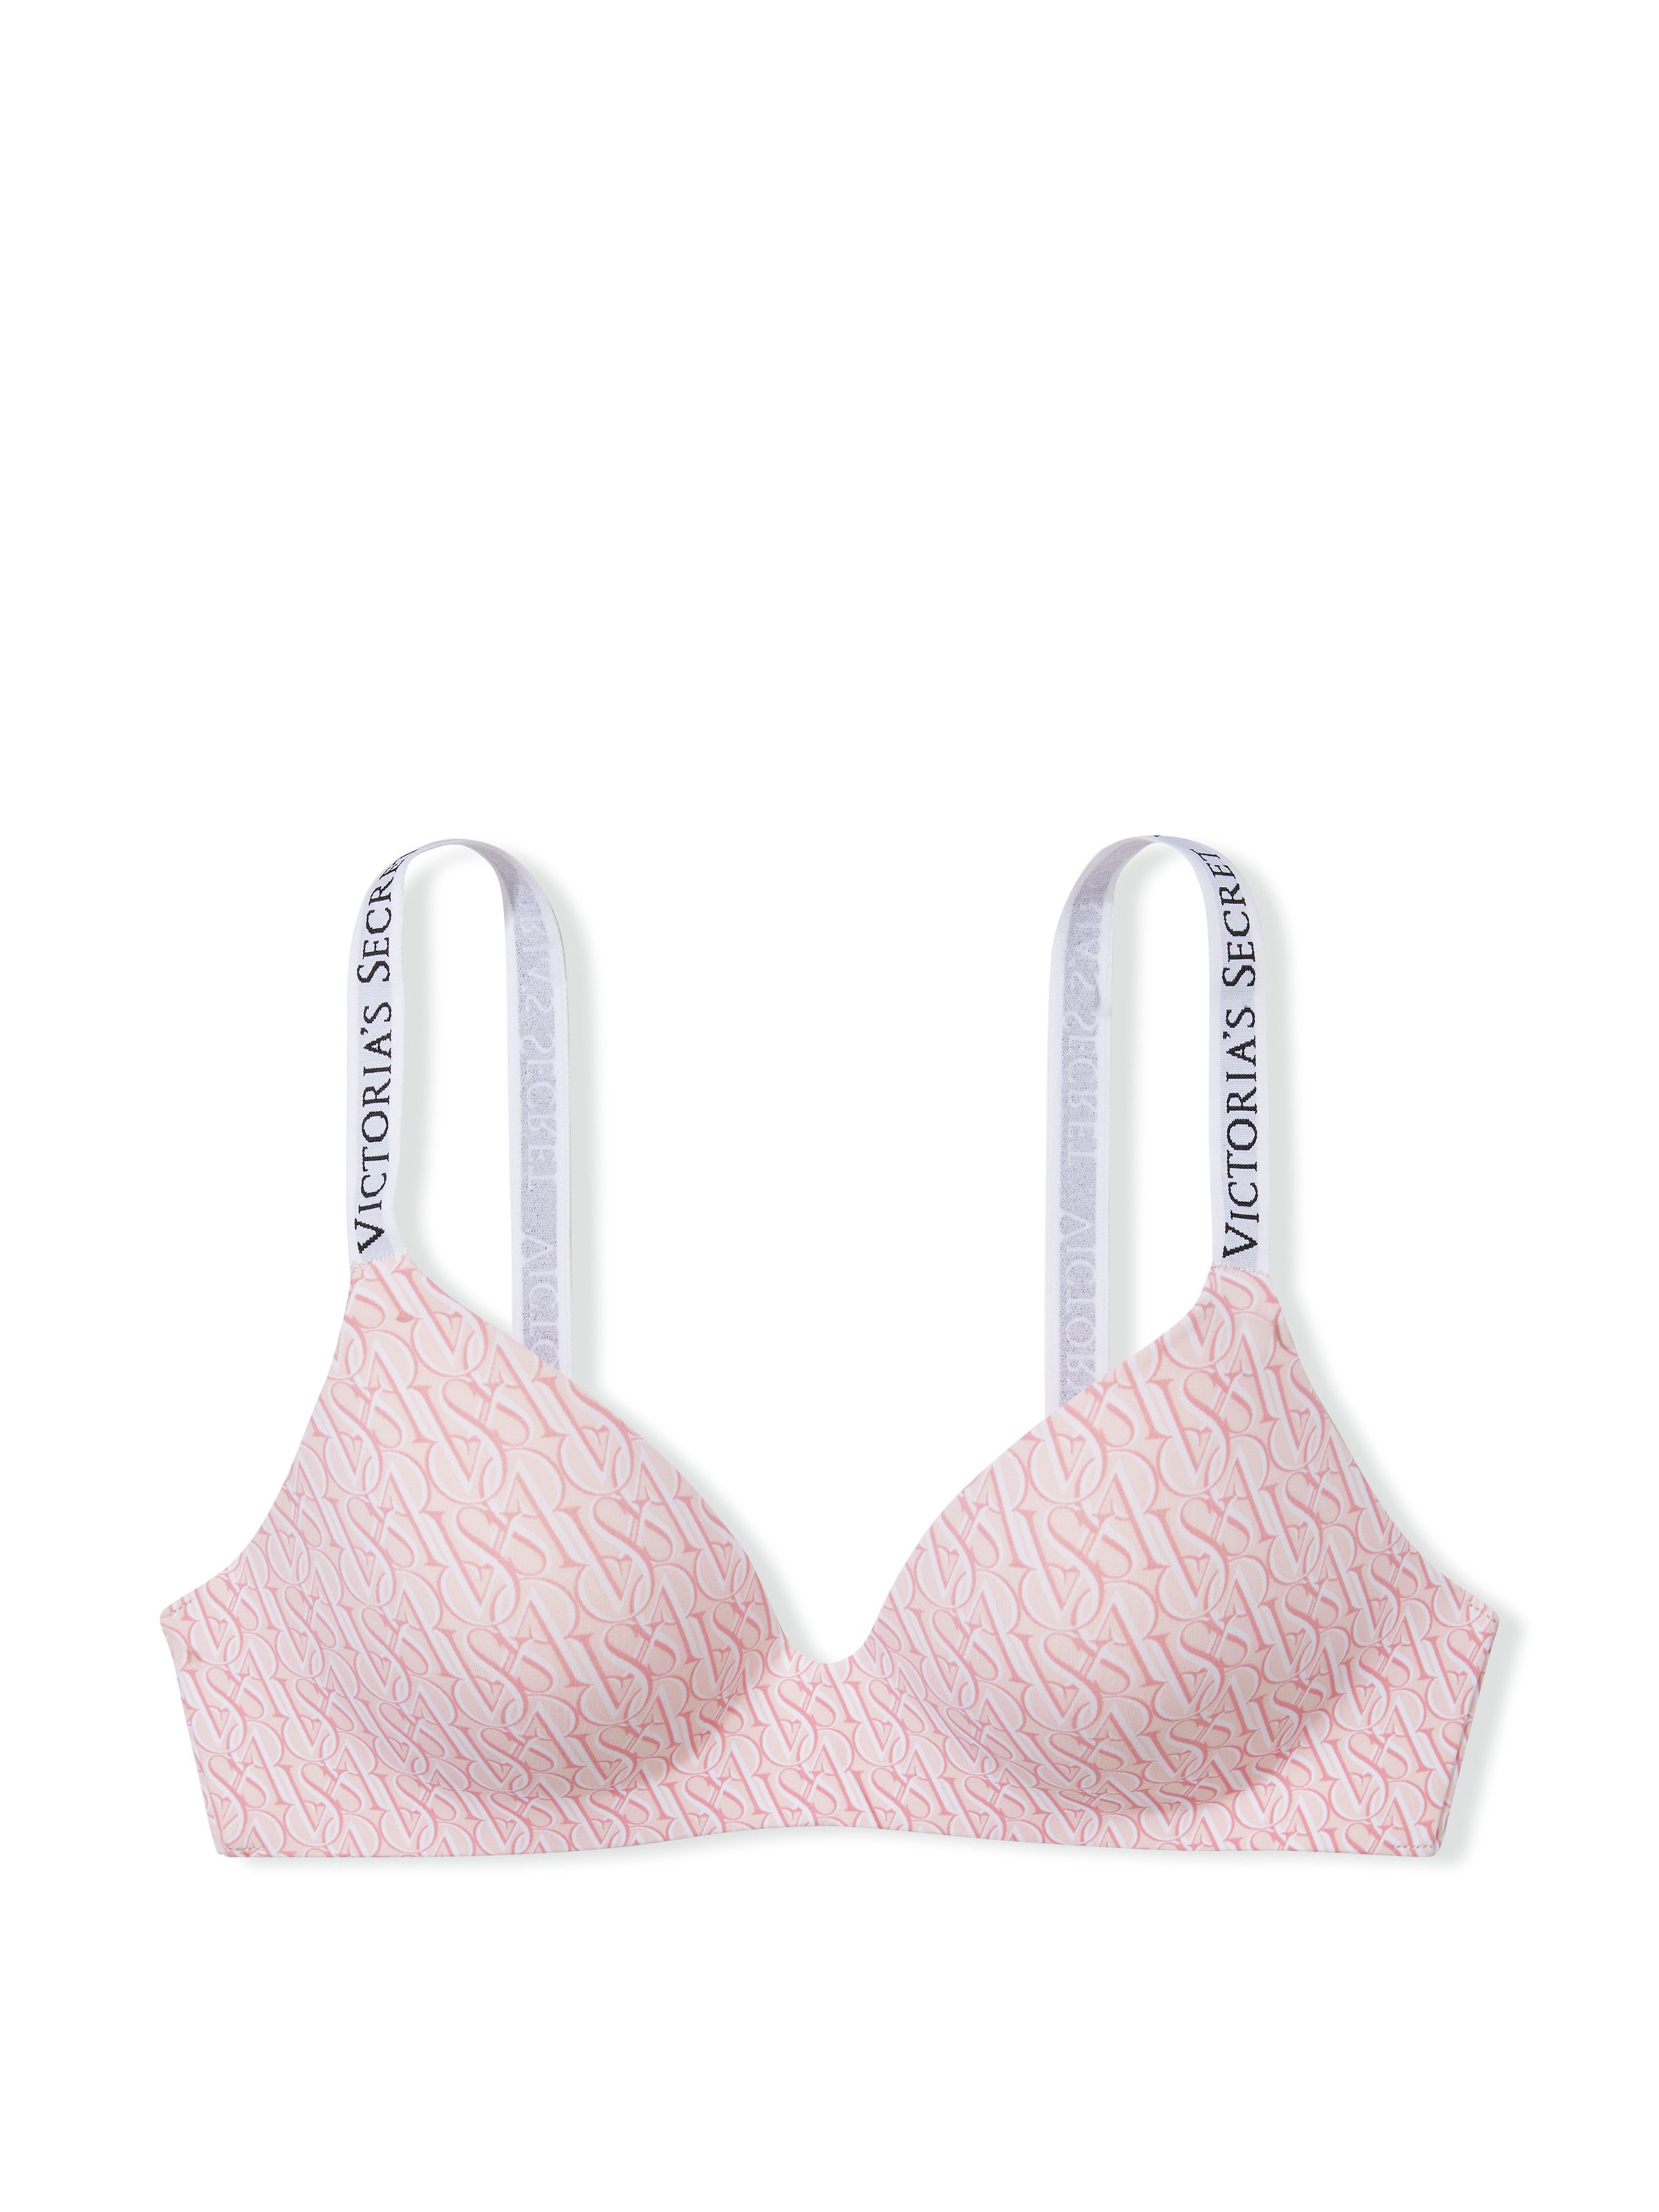 Victoria's Secret Pink T Shirt Lightly Lined Wireless Bra Size